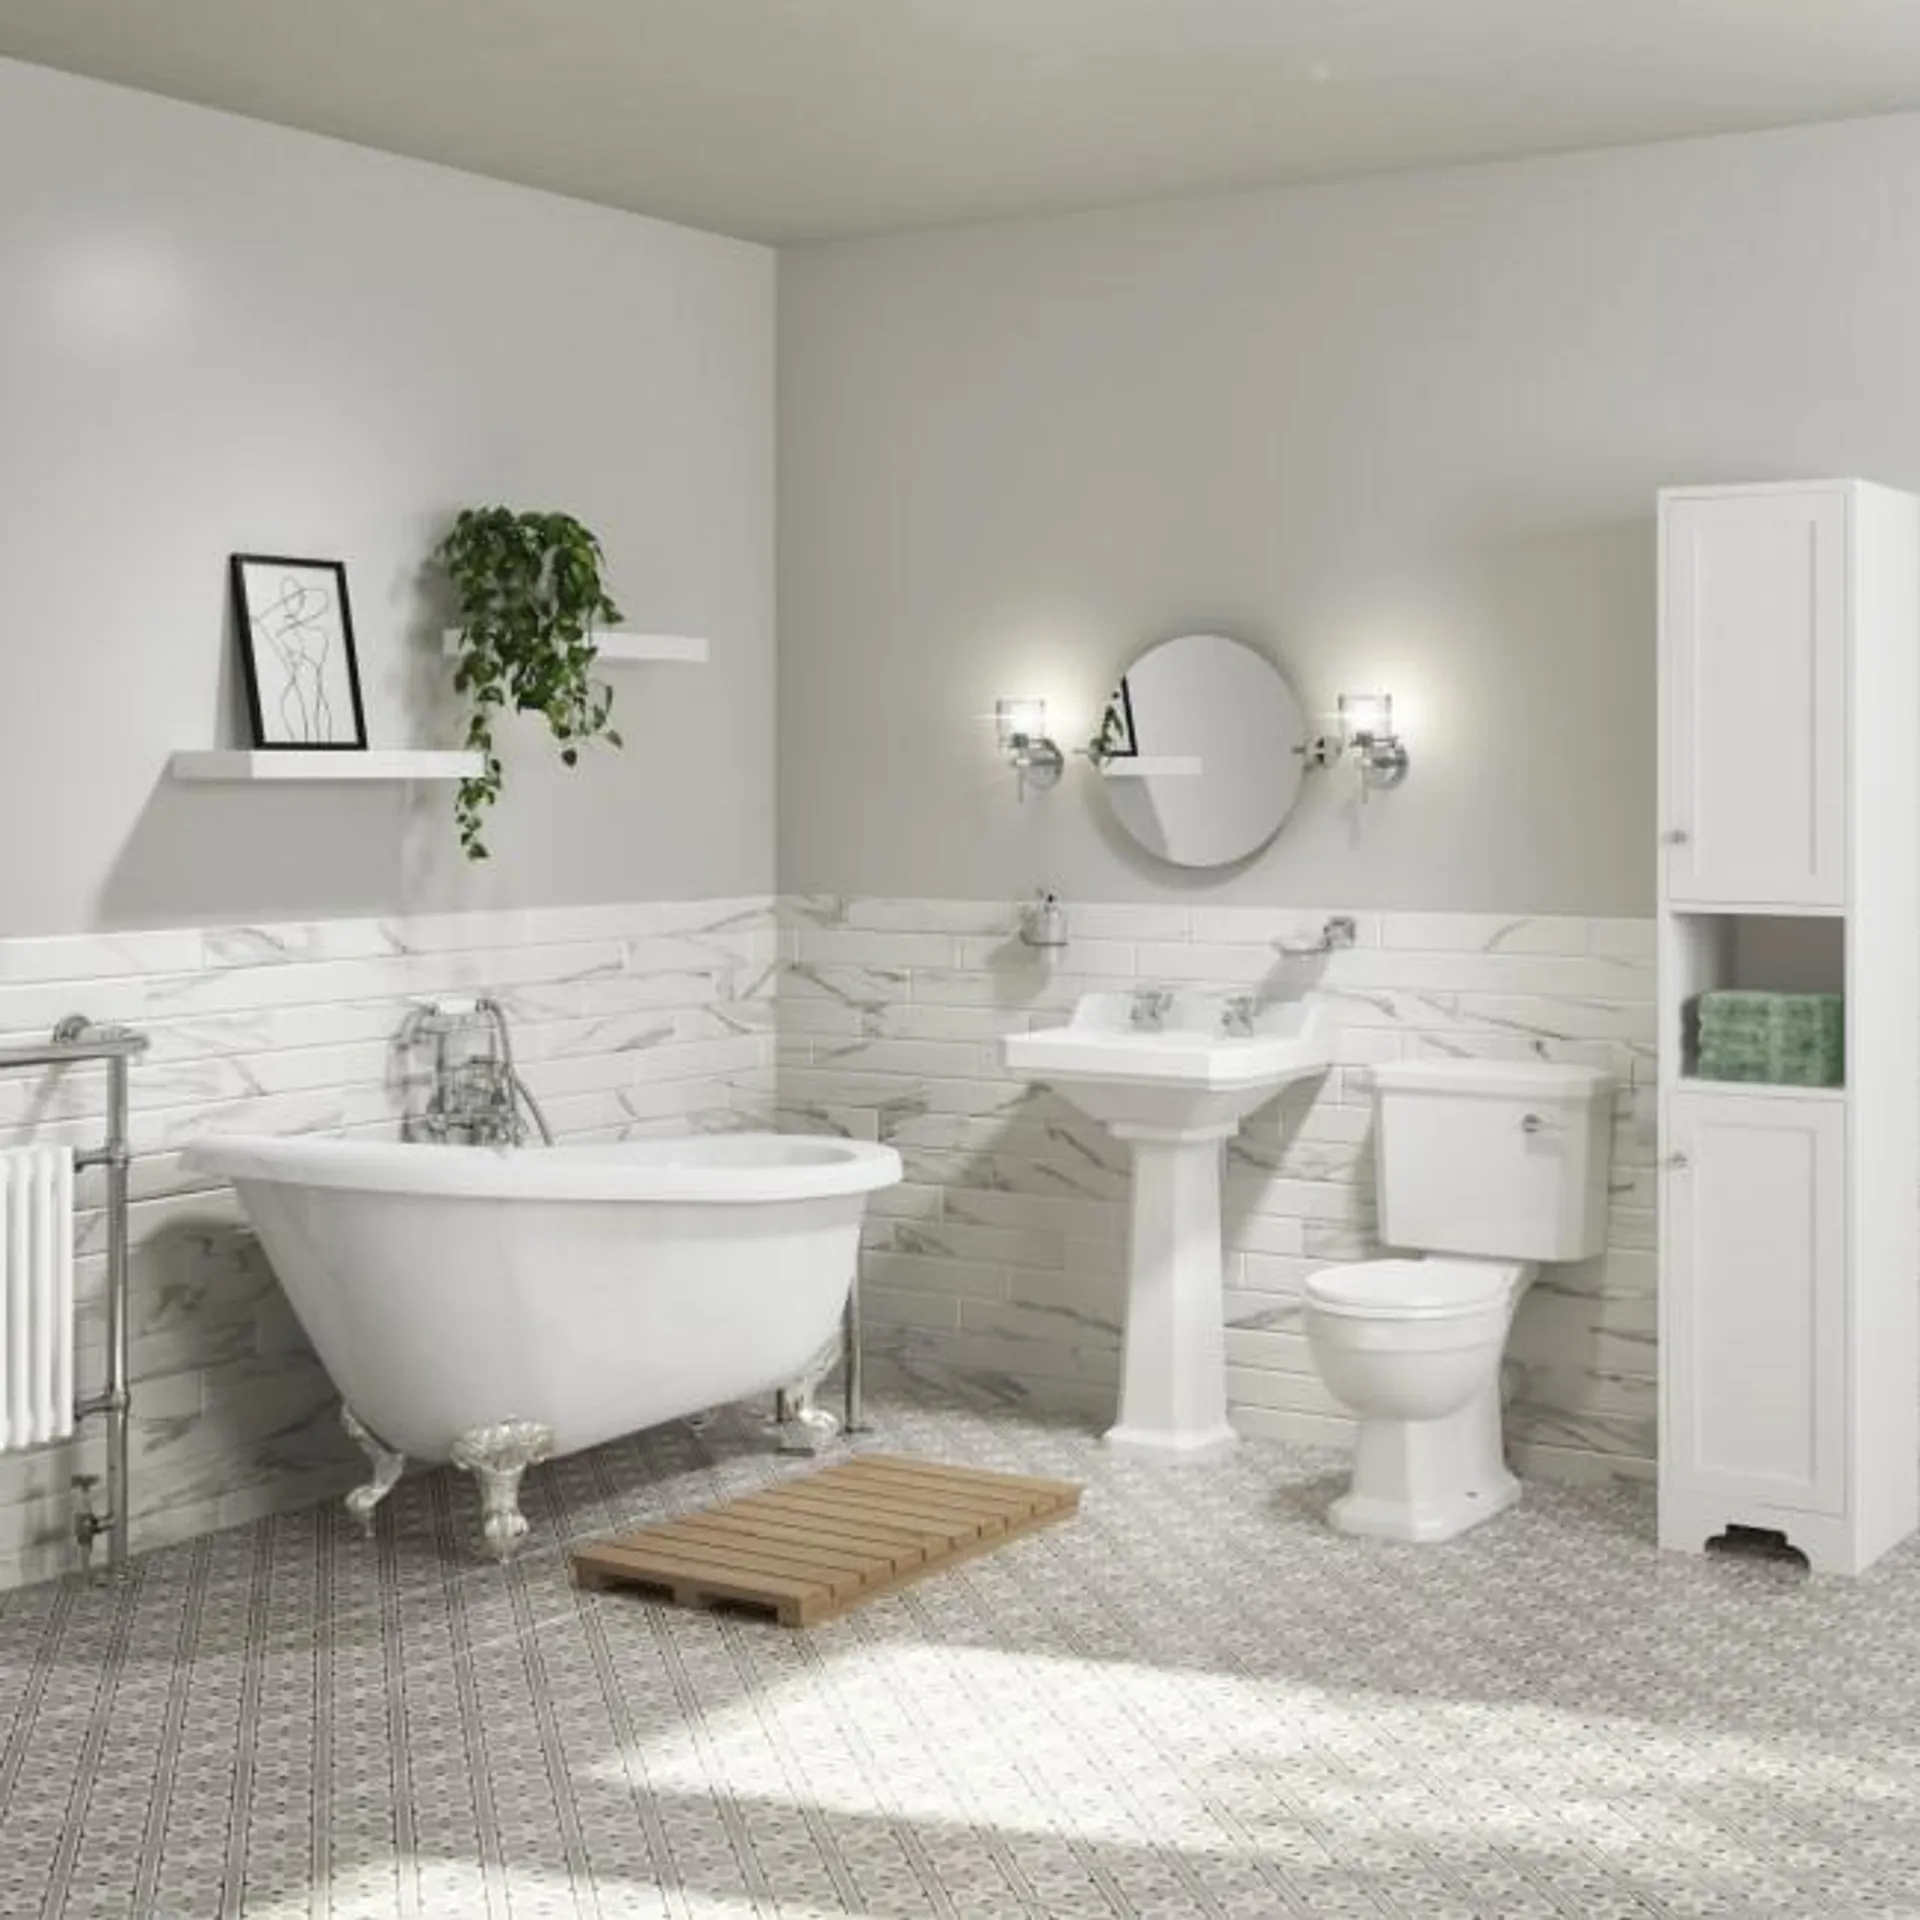 Park Royal Single Ended Slipper Freestanding Bath Suite with Toilet & Basin